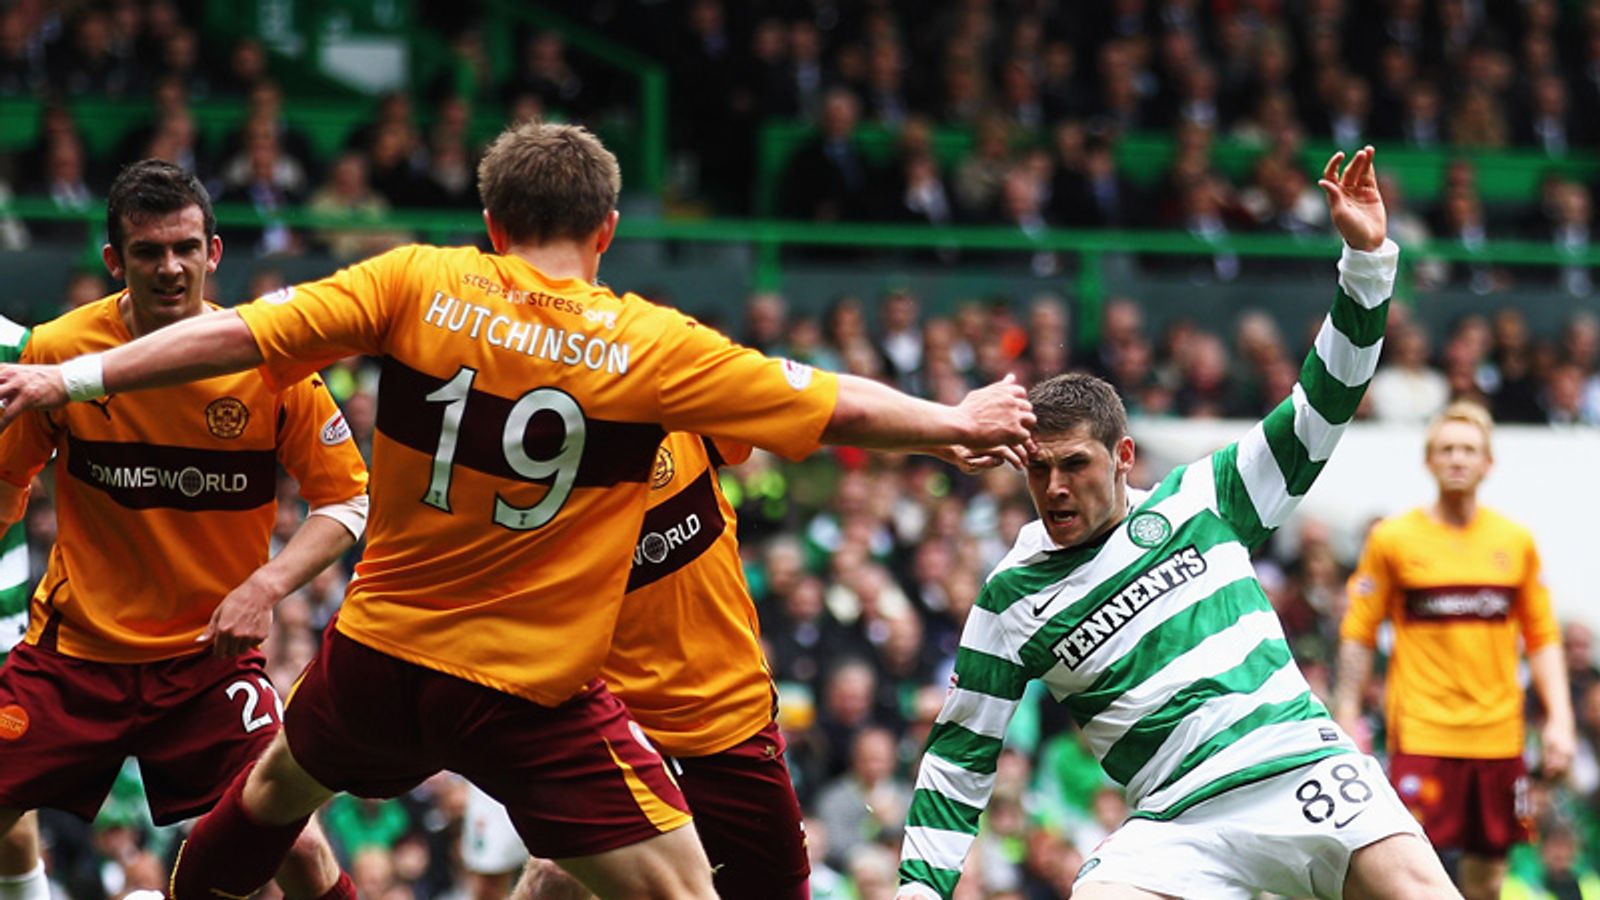 Celtic 4 - 0 Motherwell - Match Report & Highlights